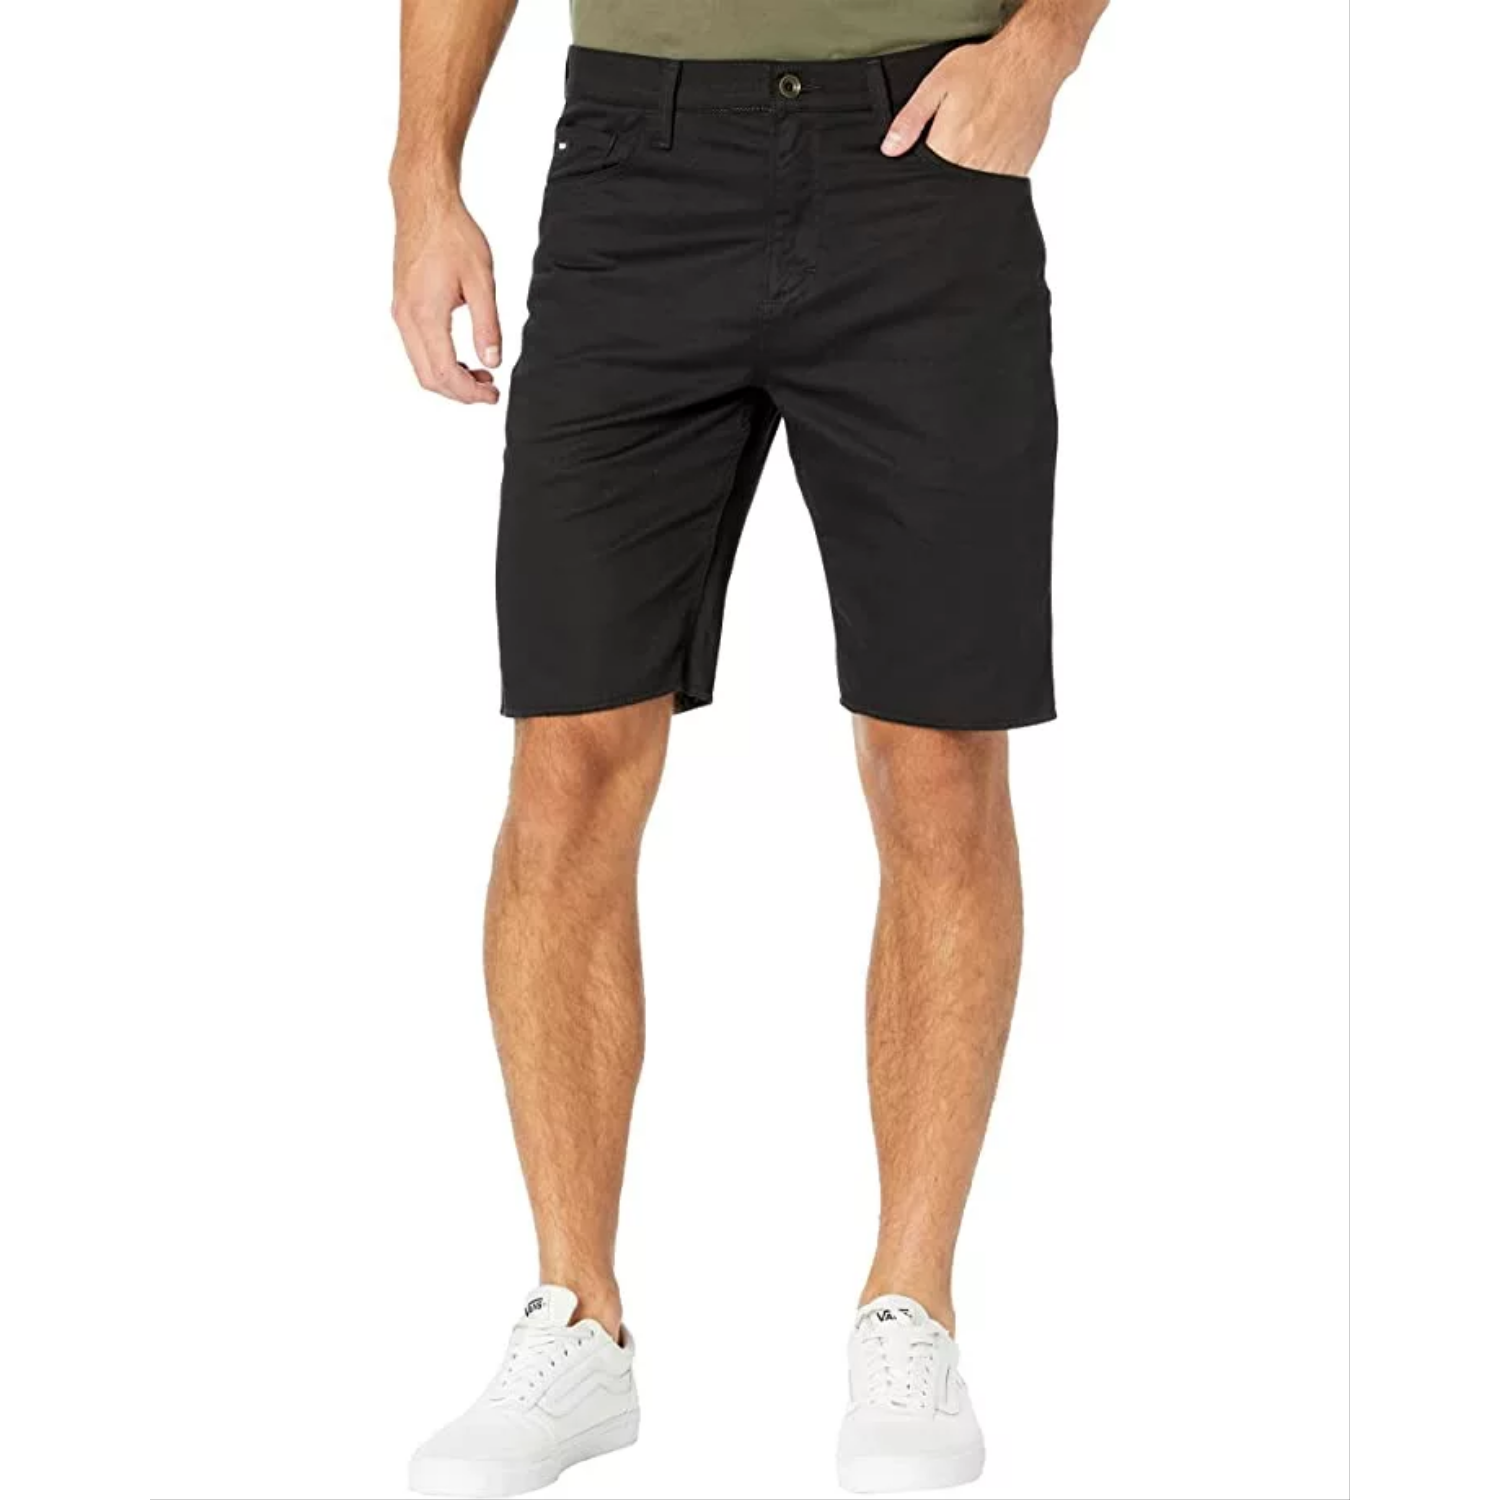 Shop Men\'s & Comfortable - Stylish Shorts Deals! Great 